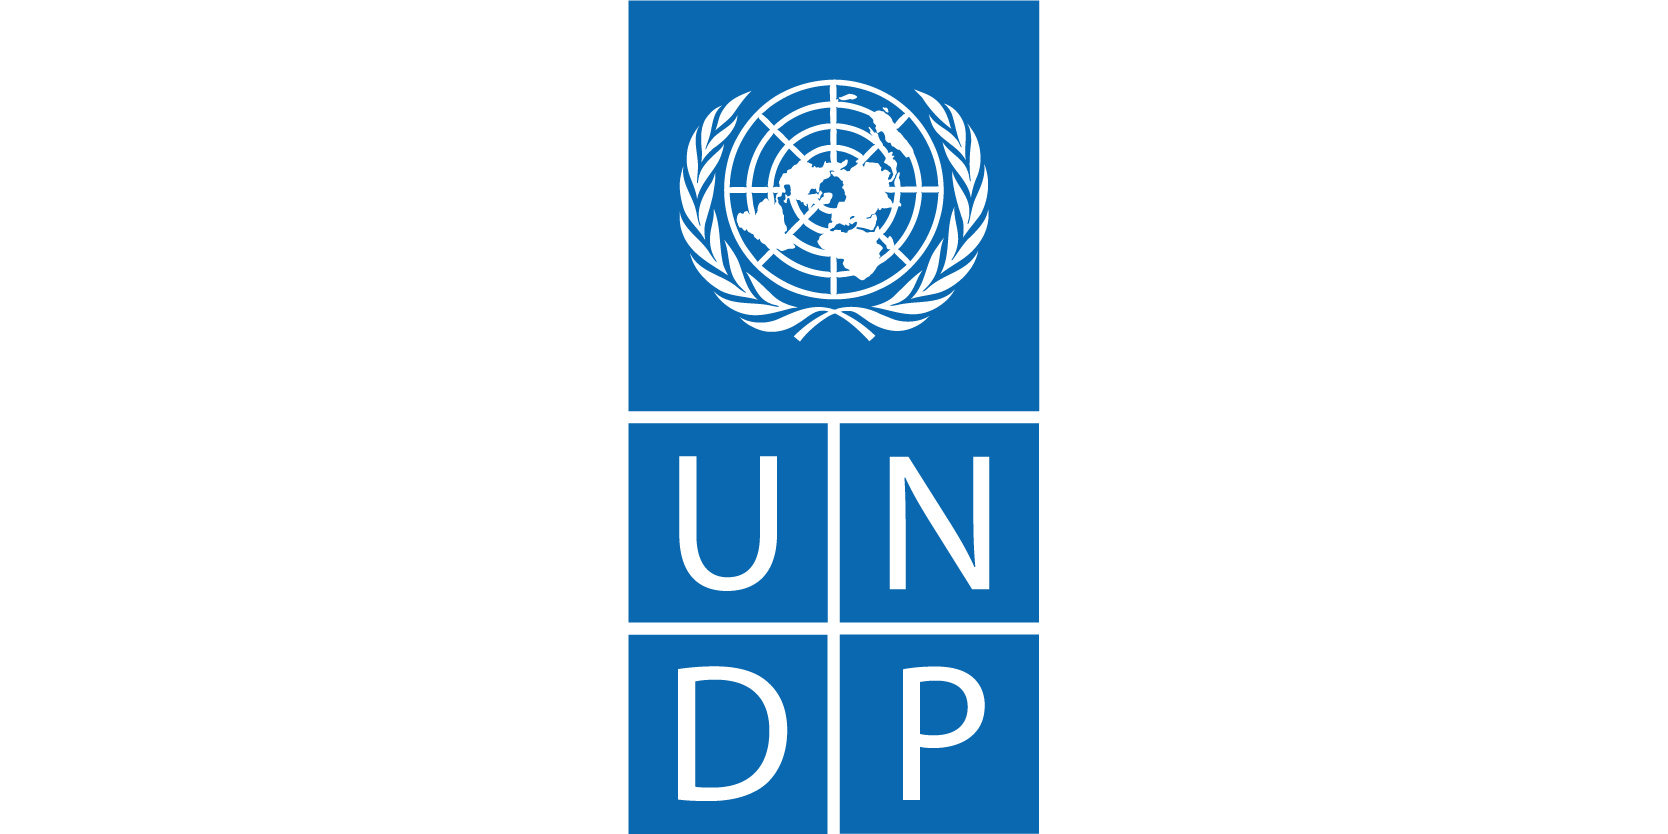 UNDP Ukraine logo